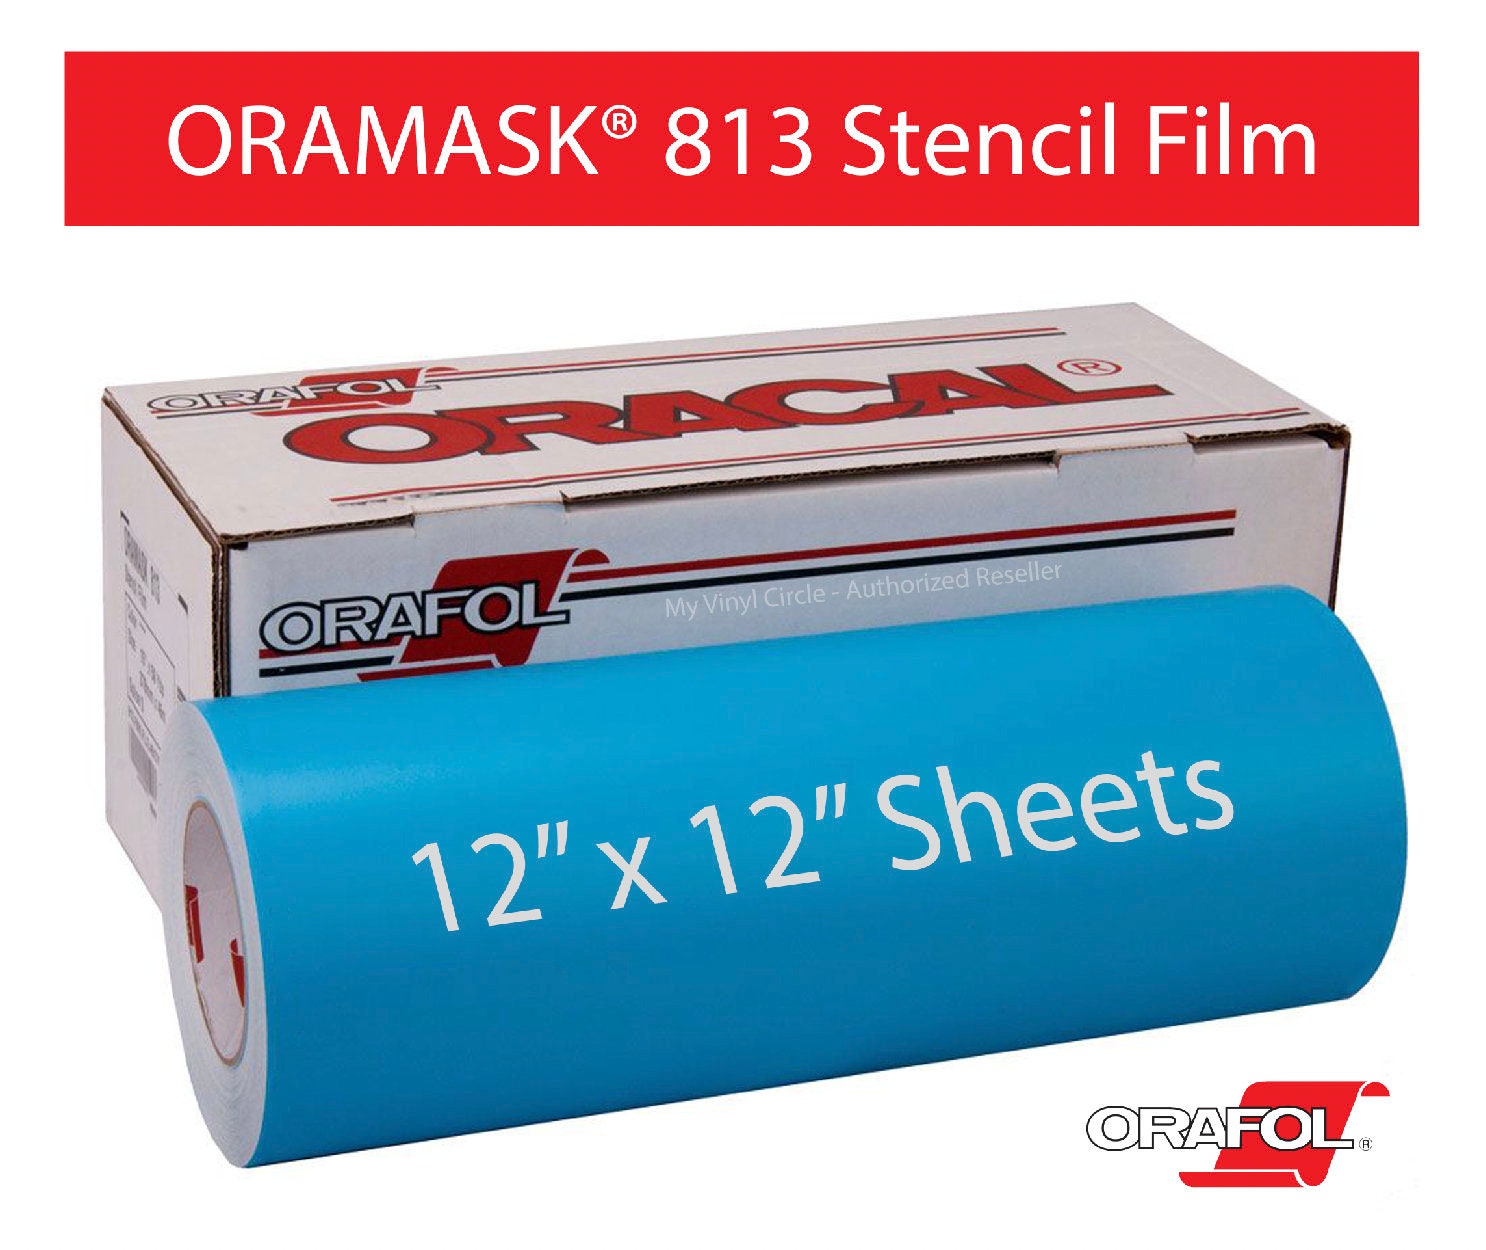 Oracal Oramask 813 Stencil Film 2 Pack